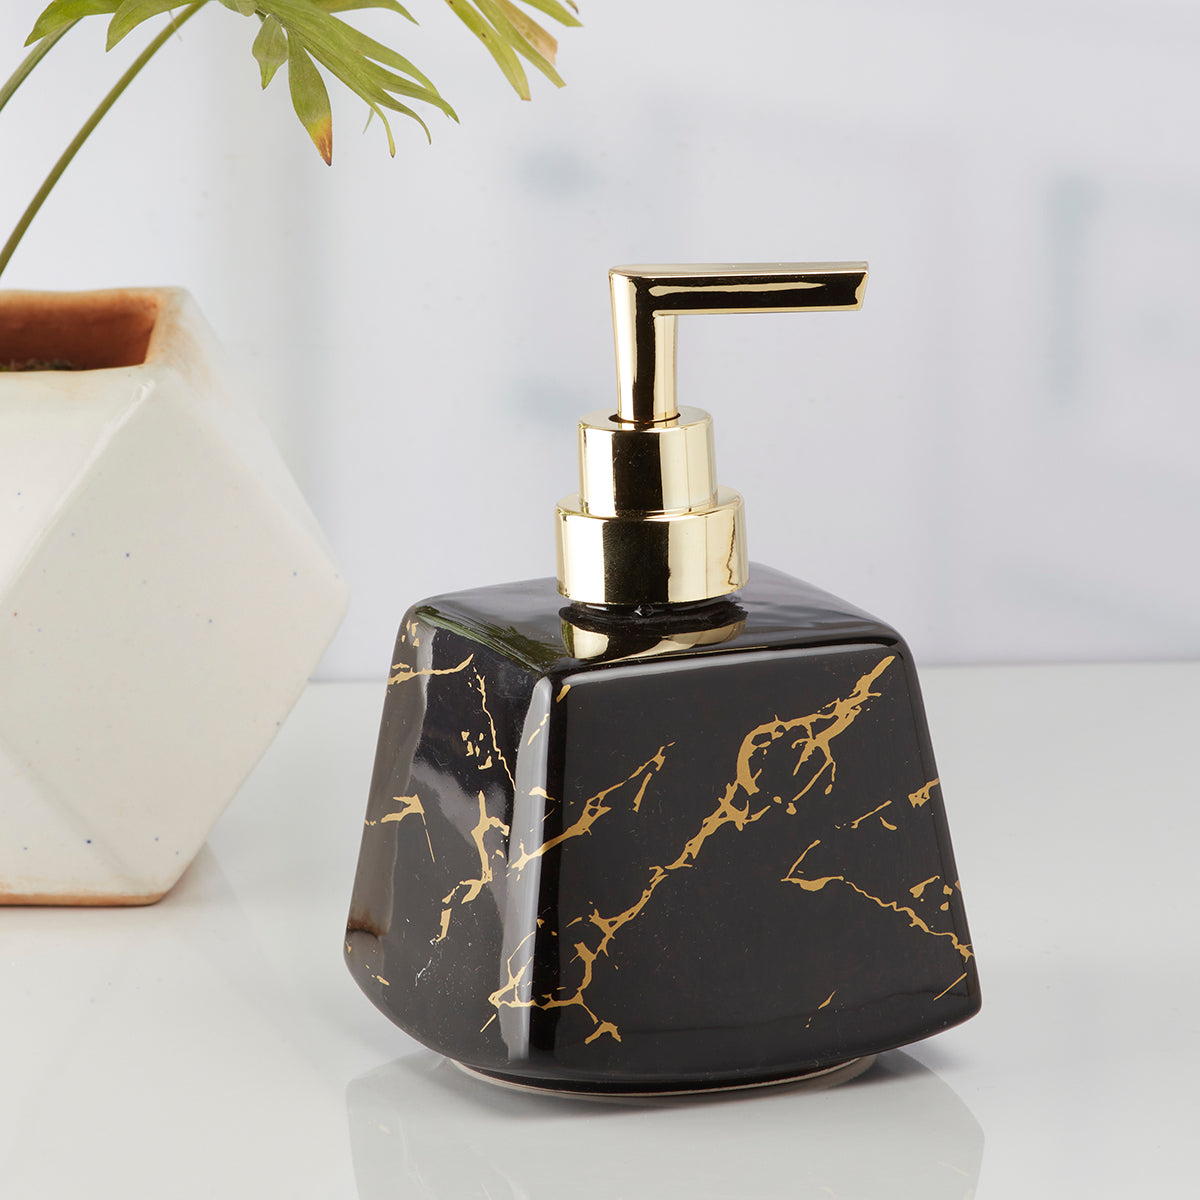 Ceramic Soap Dispenser handwash Pump for Bathroom, Set of 1, Black/Gold (10153)